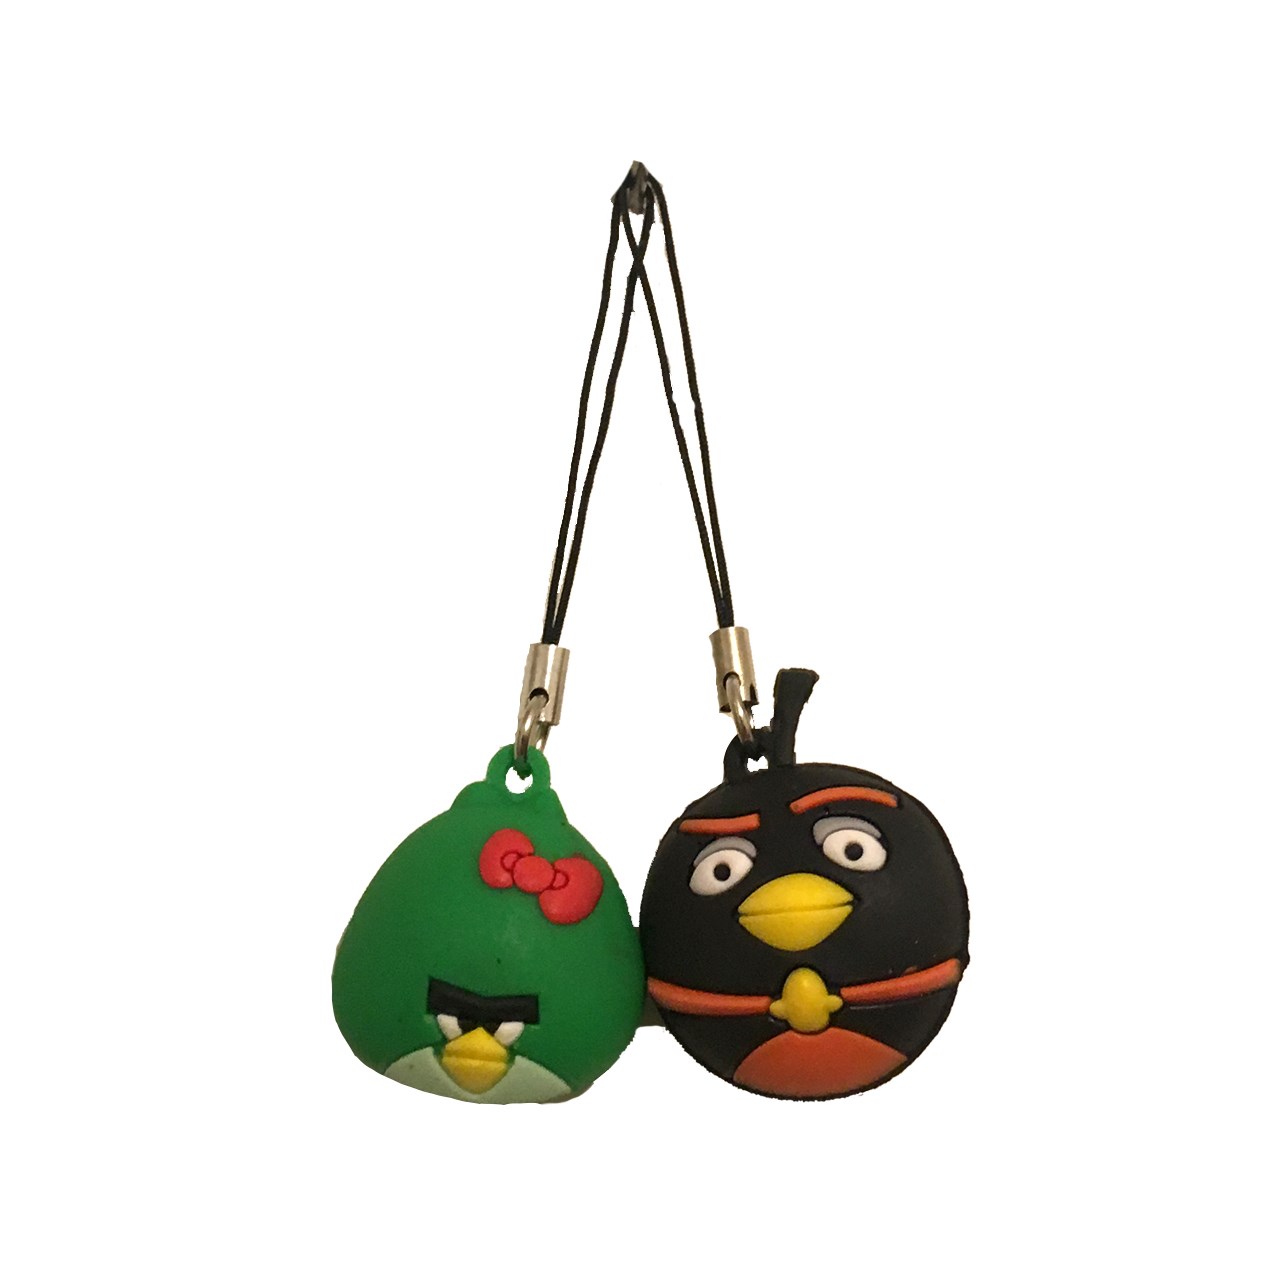 جاسوییچی انگری بردز بانیبو01 مدل Angry Birds بسته دو عددی